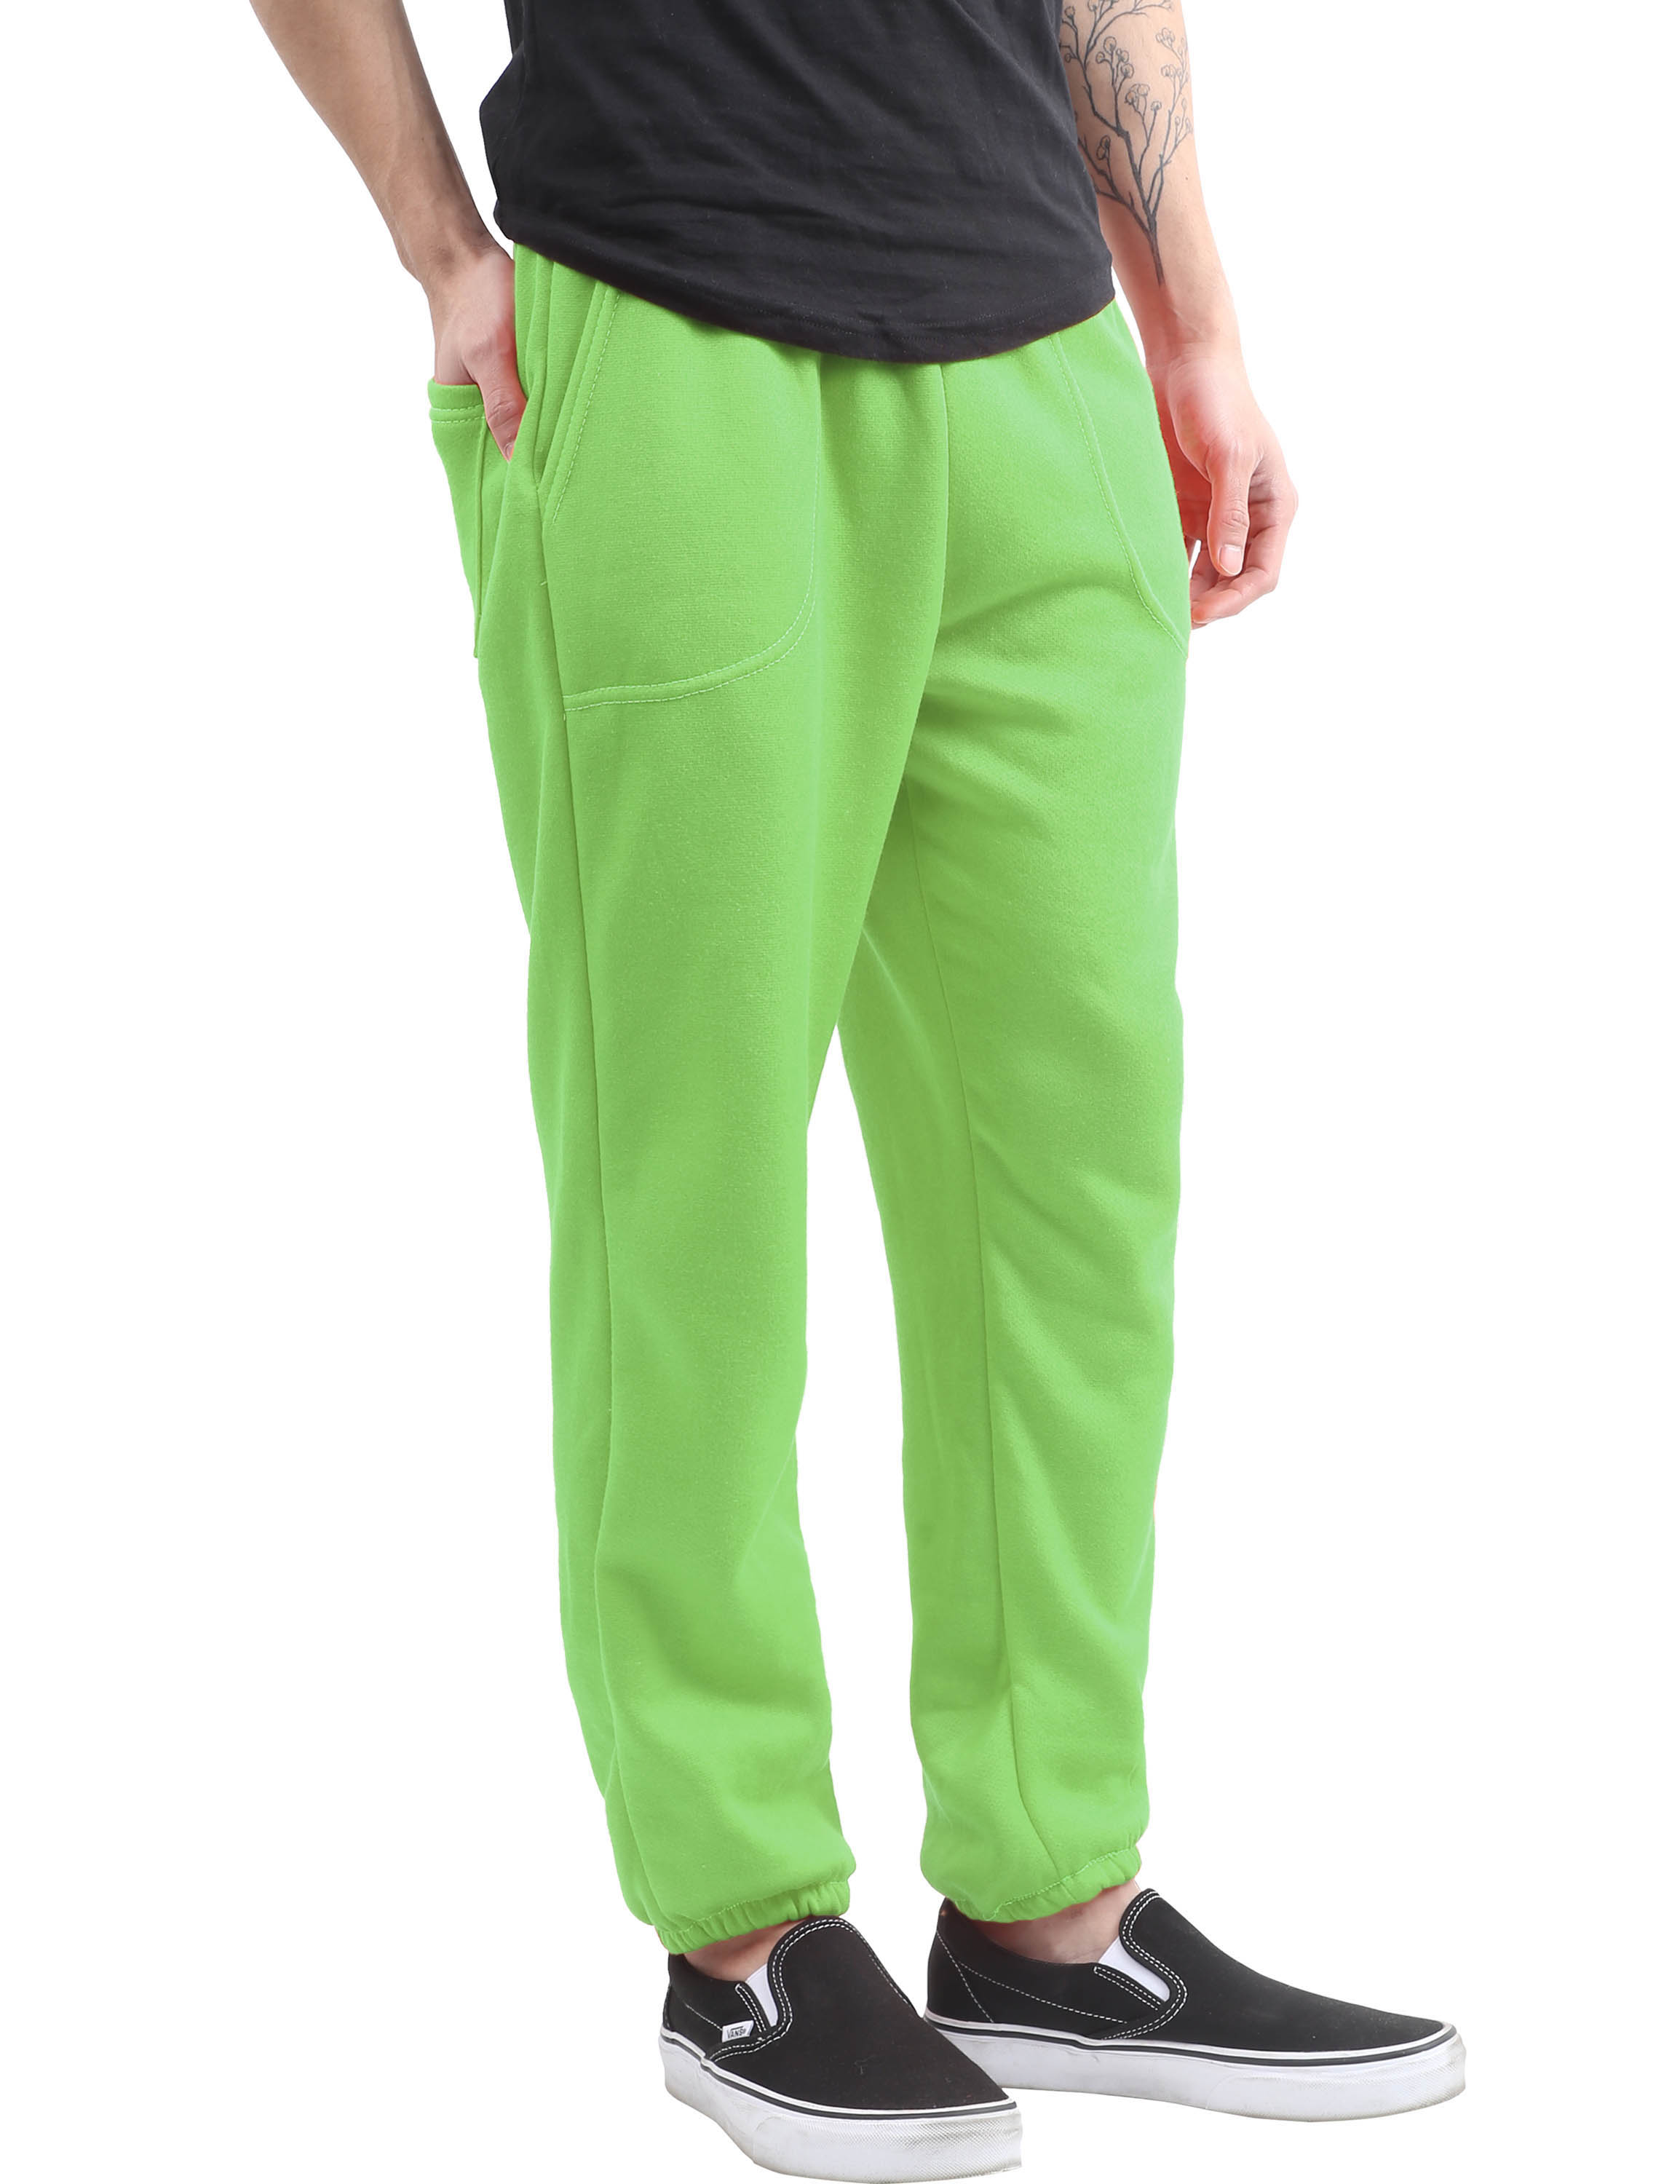 Ma Croix Men's Elastic Bottom Sweatpants with Pocket - image 2 of 5